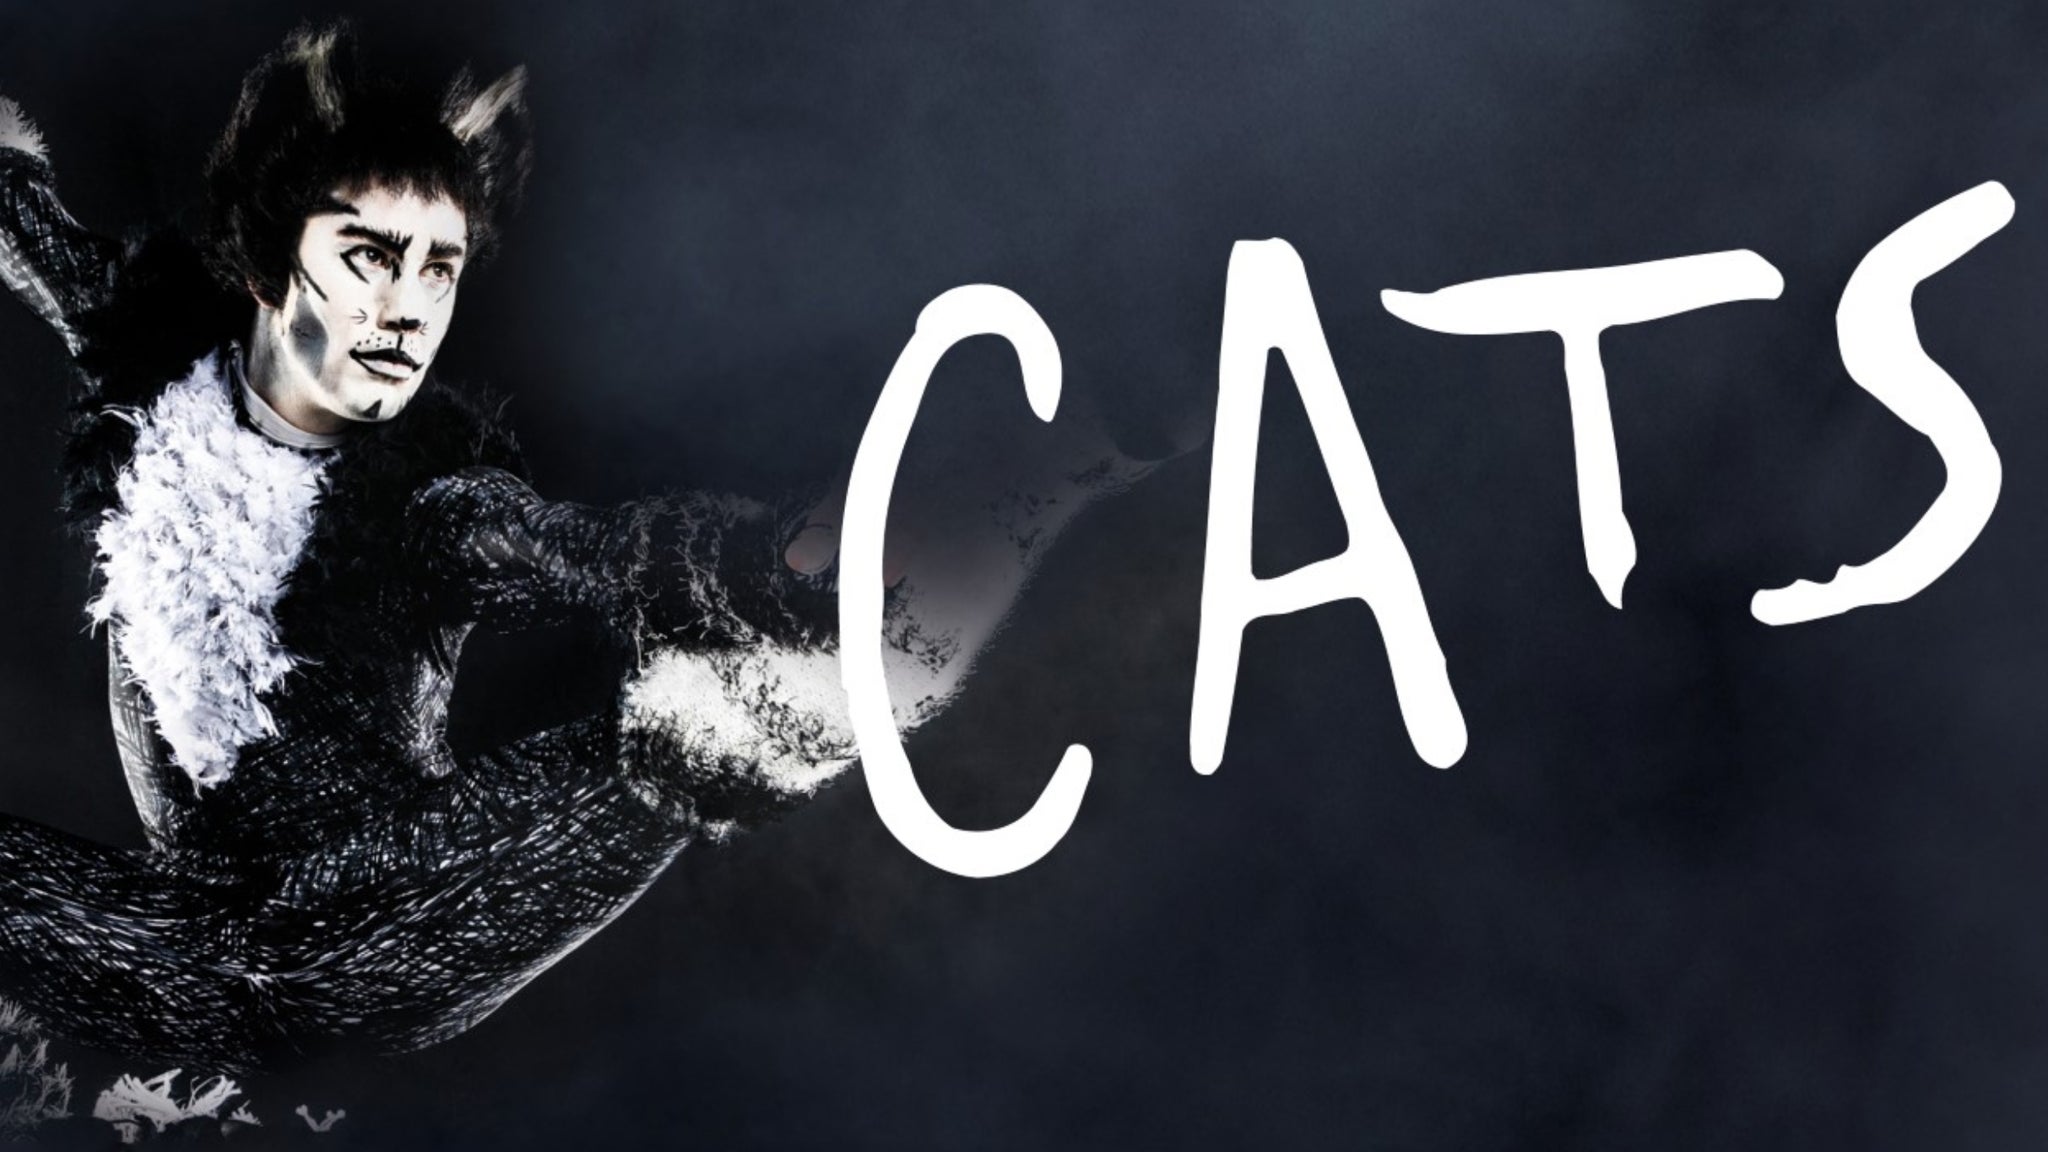 Cats in Washington promo photo for BATN presale offer code